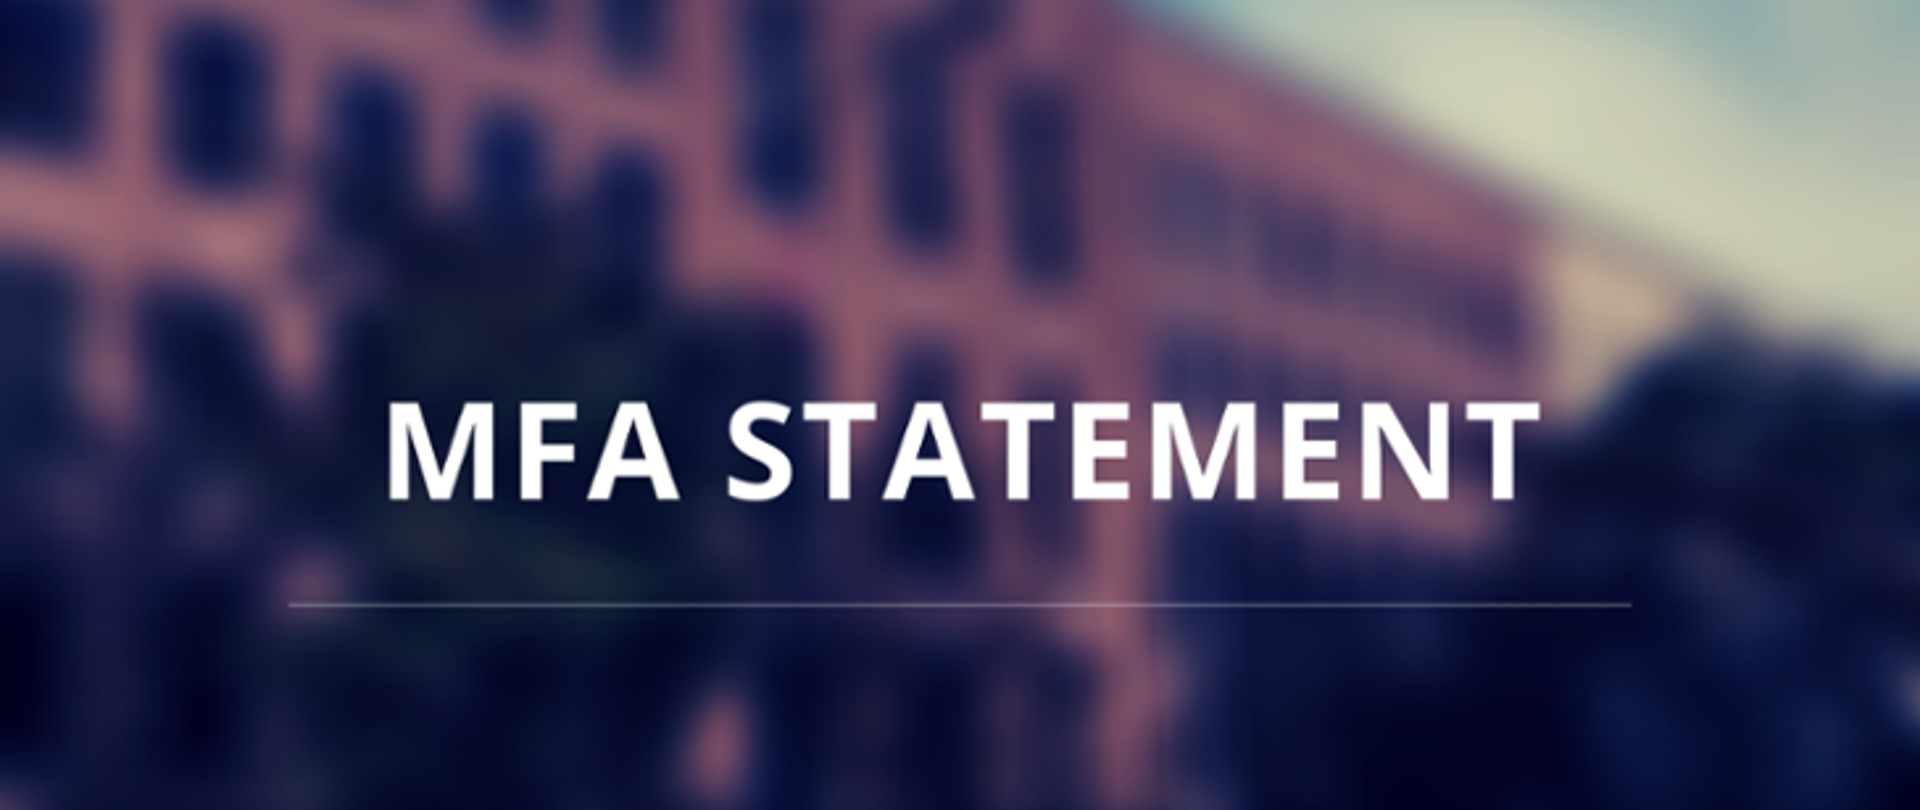 mfa2 statement